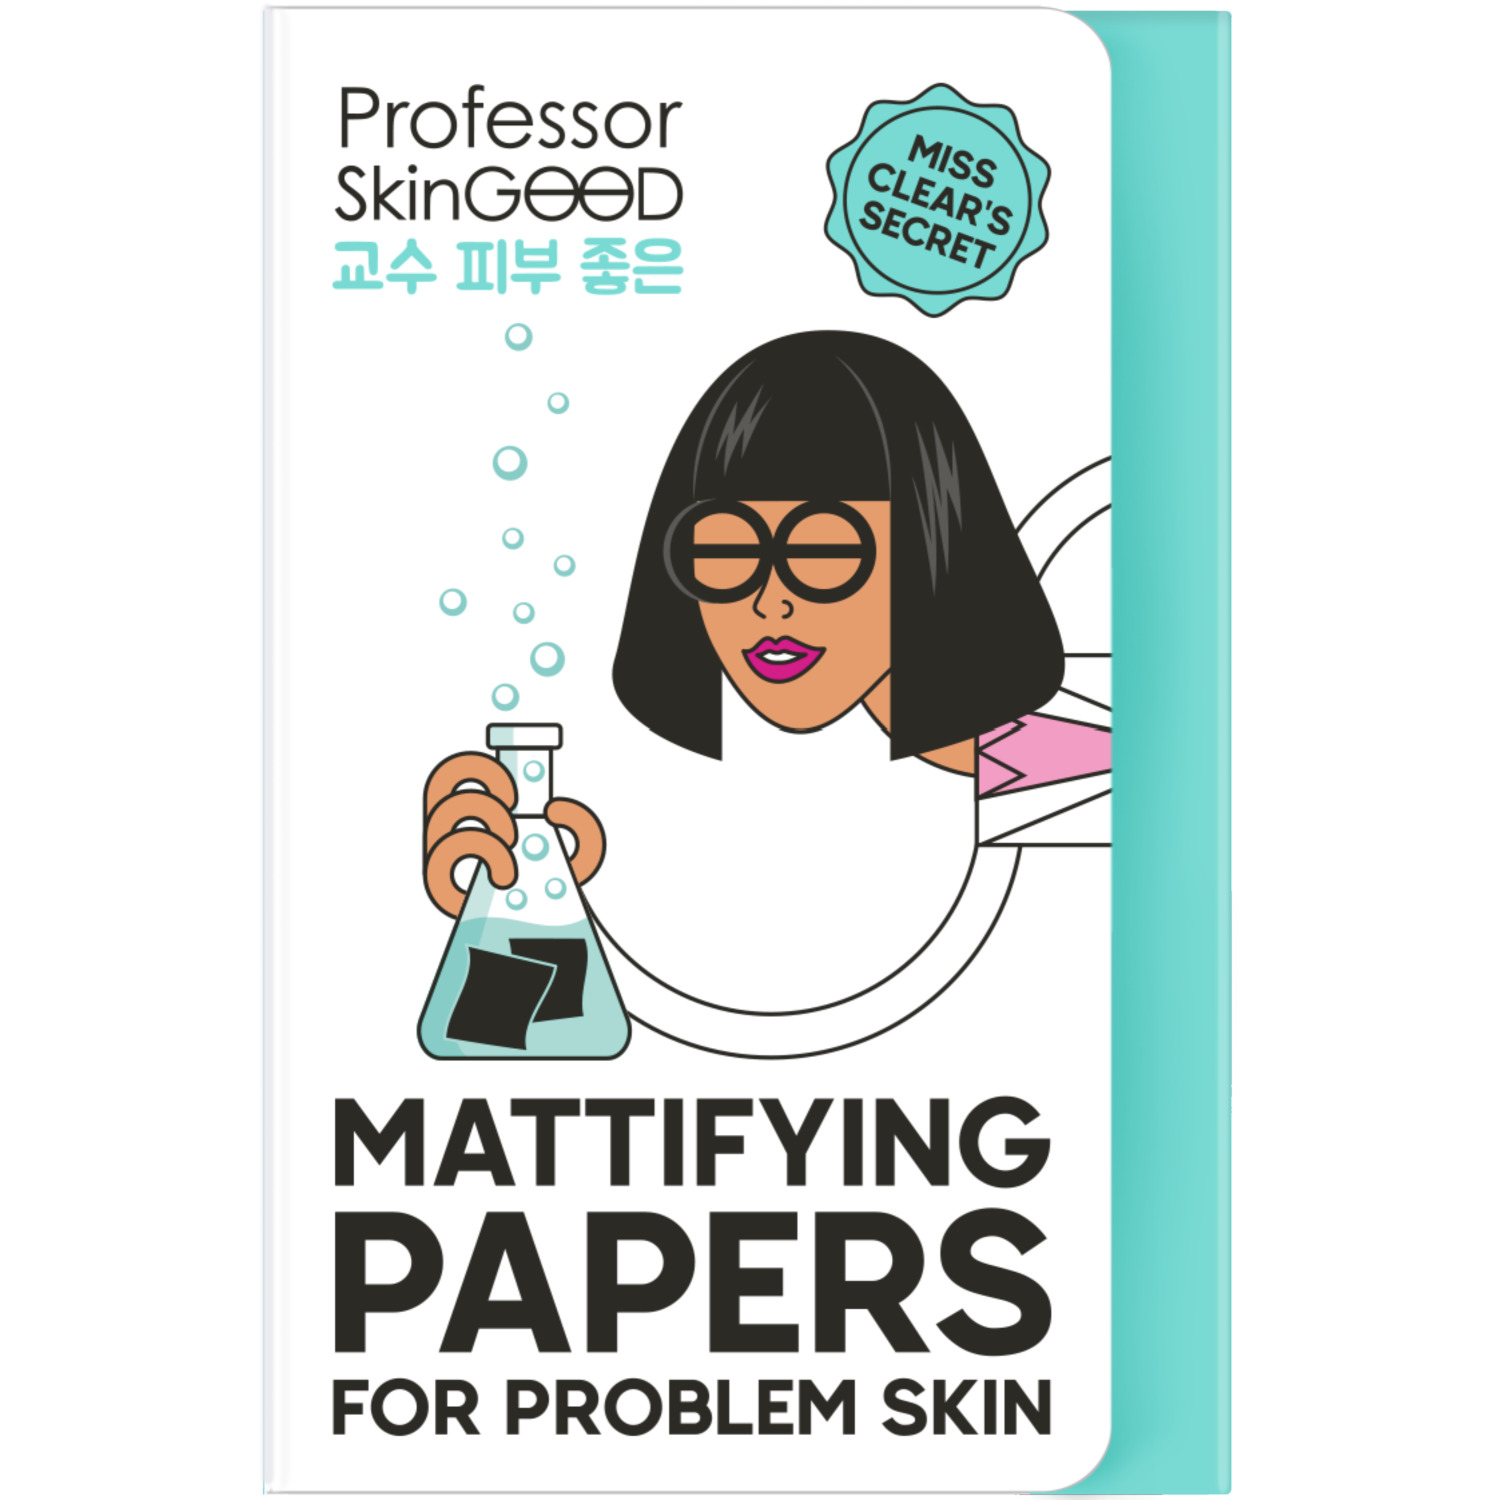 Салфетки Professor SkinGood Mattifying Papers матирующие для проблемной кожи 50 шт матирующие салфетки для лица yes girl yes 50 шт